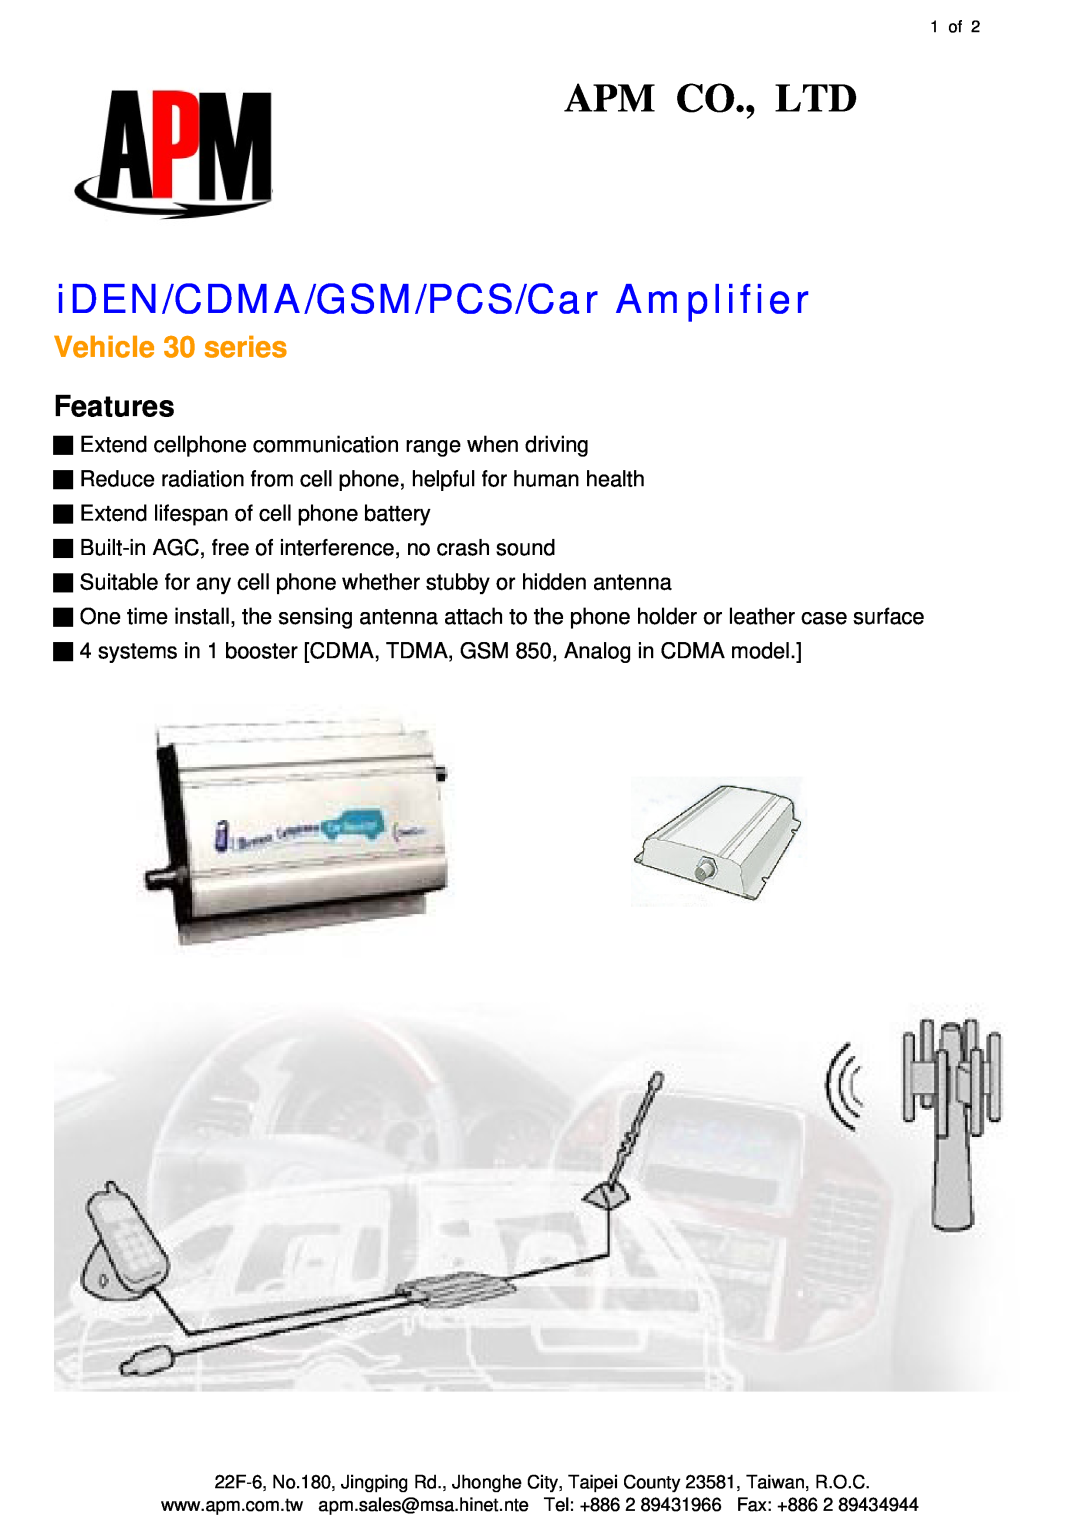 APM manual iDEN/CDMA/GSM/PCS/Car Amplifier, Vehicle 30 series, Features 